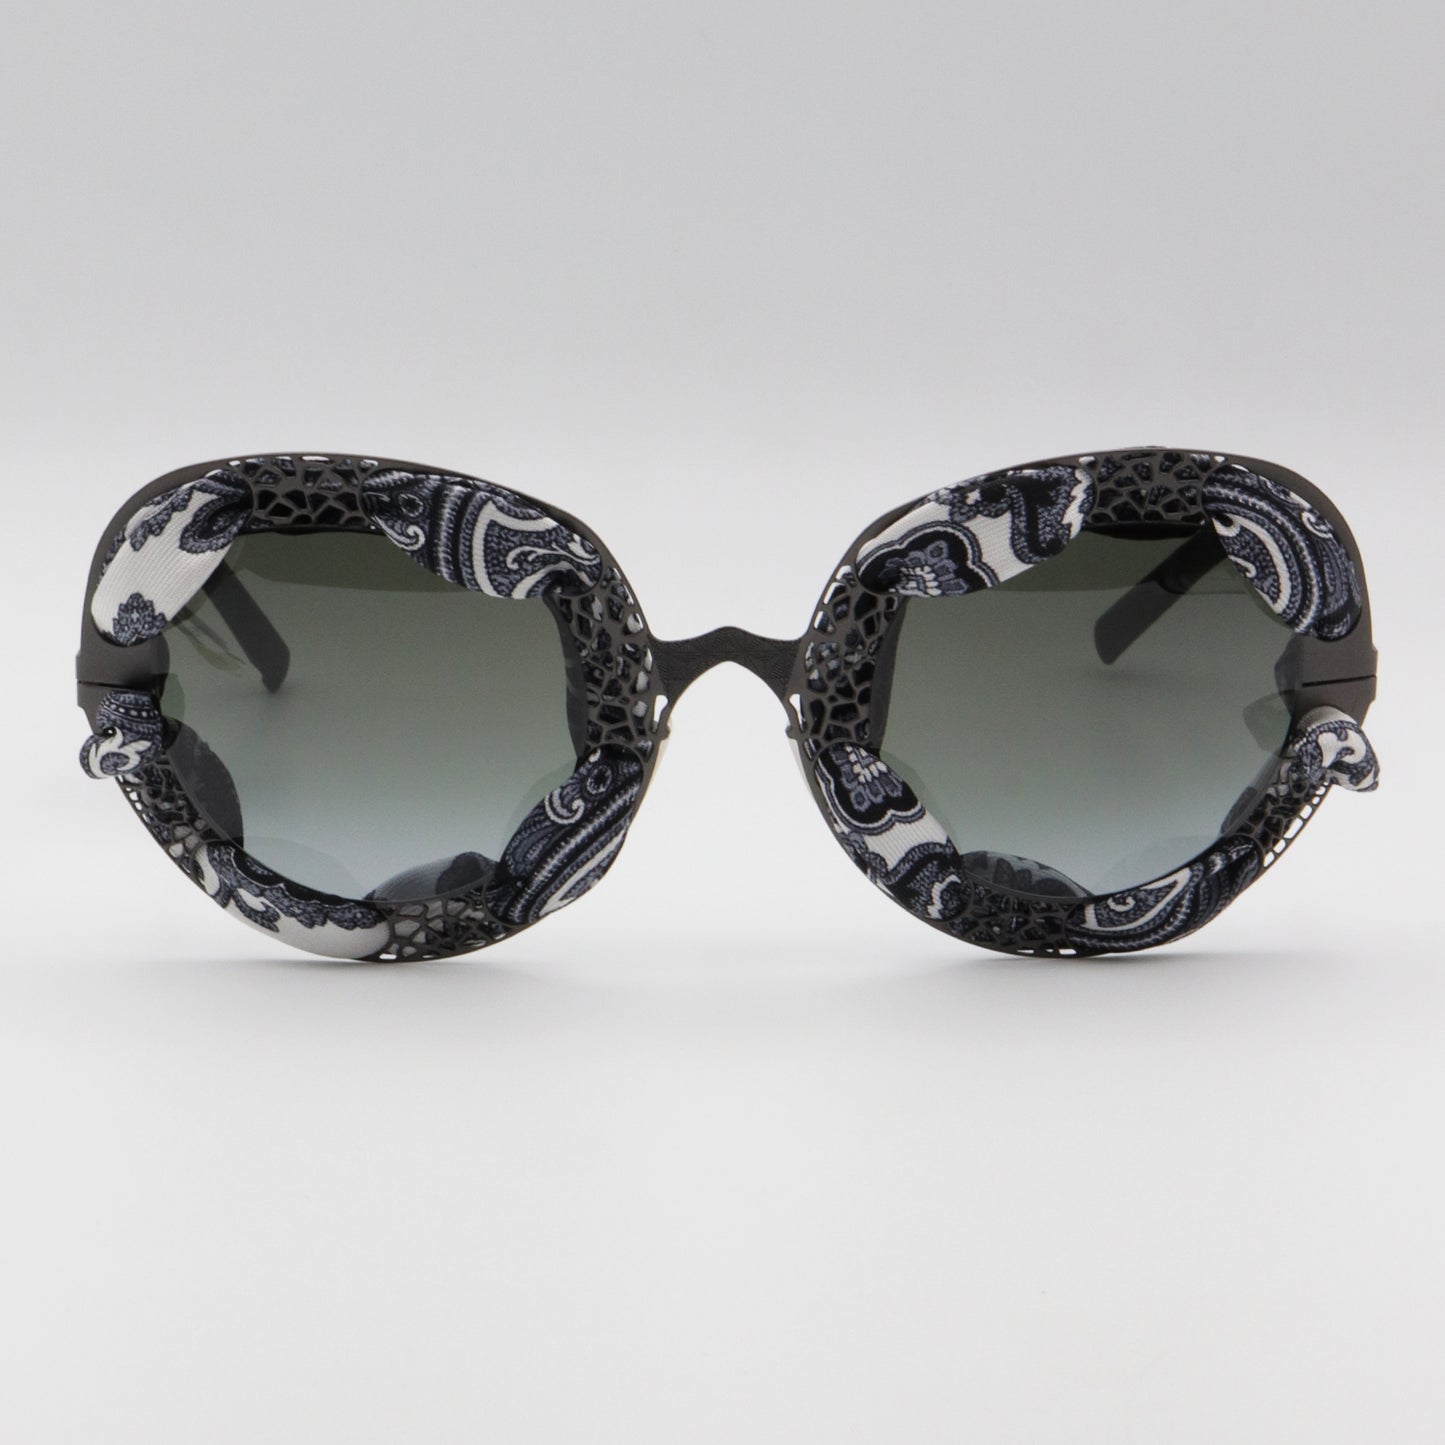 228s Pugnale & Nyleve Black and White Sunglasses